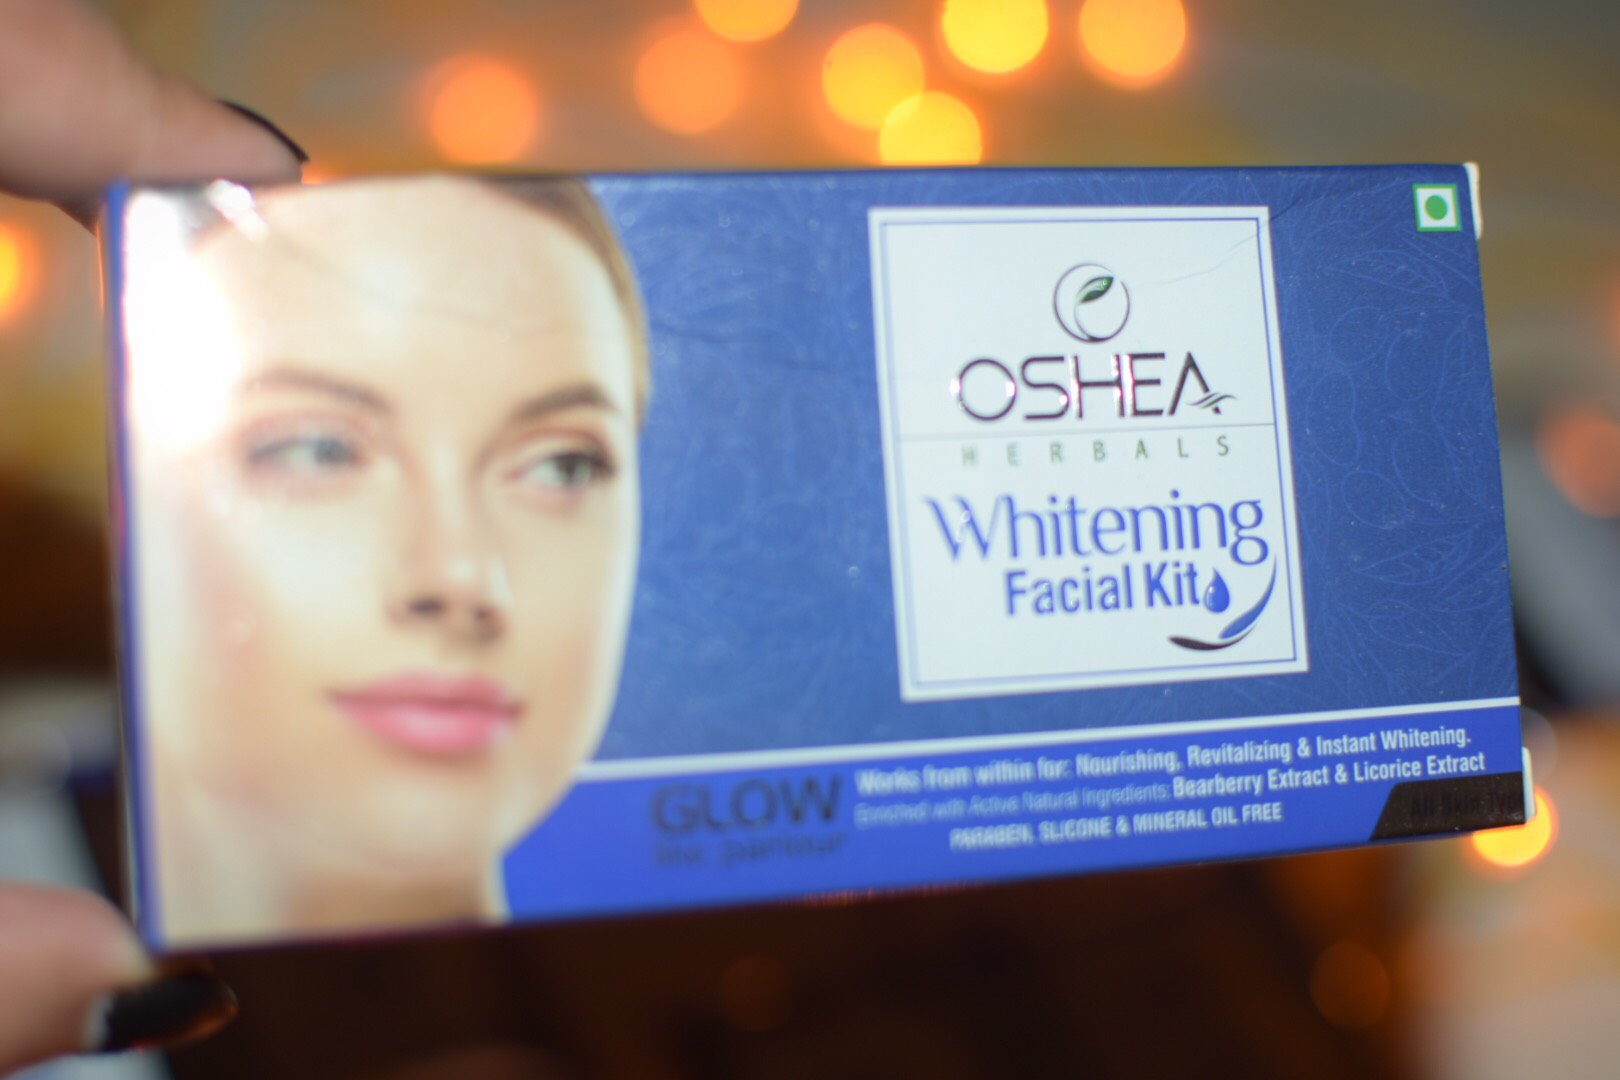 Oshea Herbals Whitening Facial Kit Review